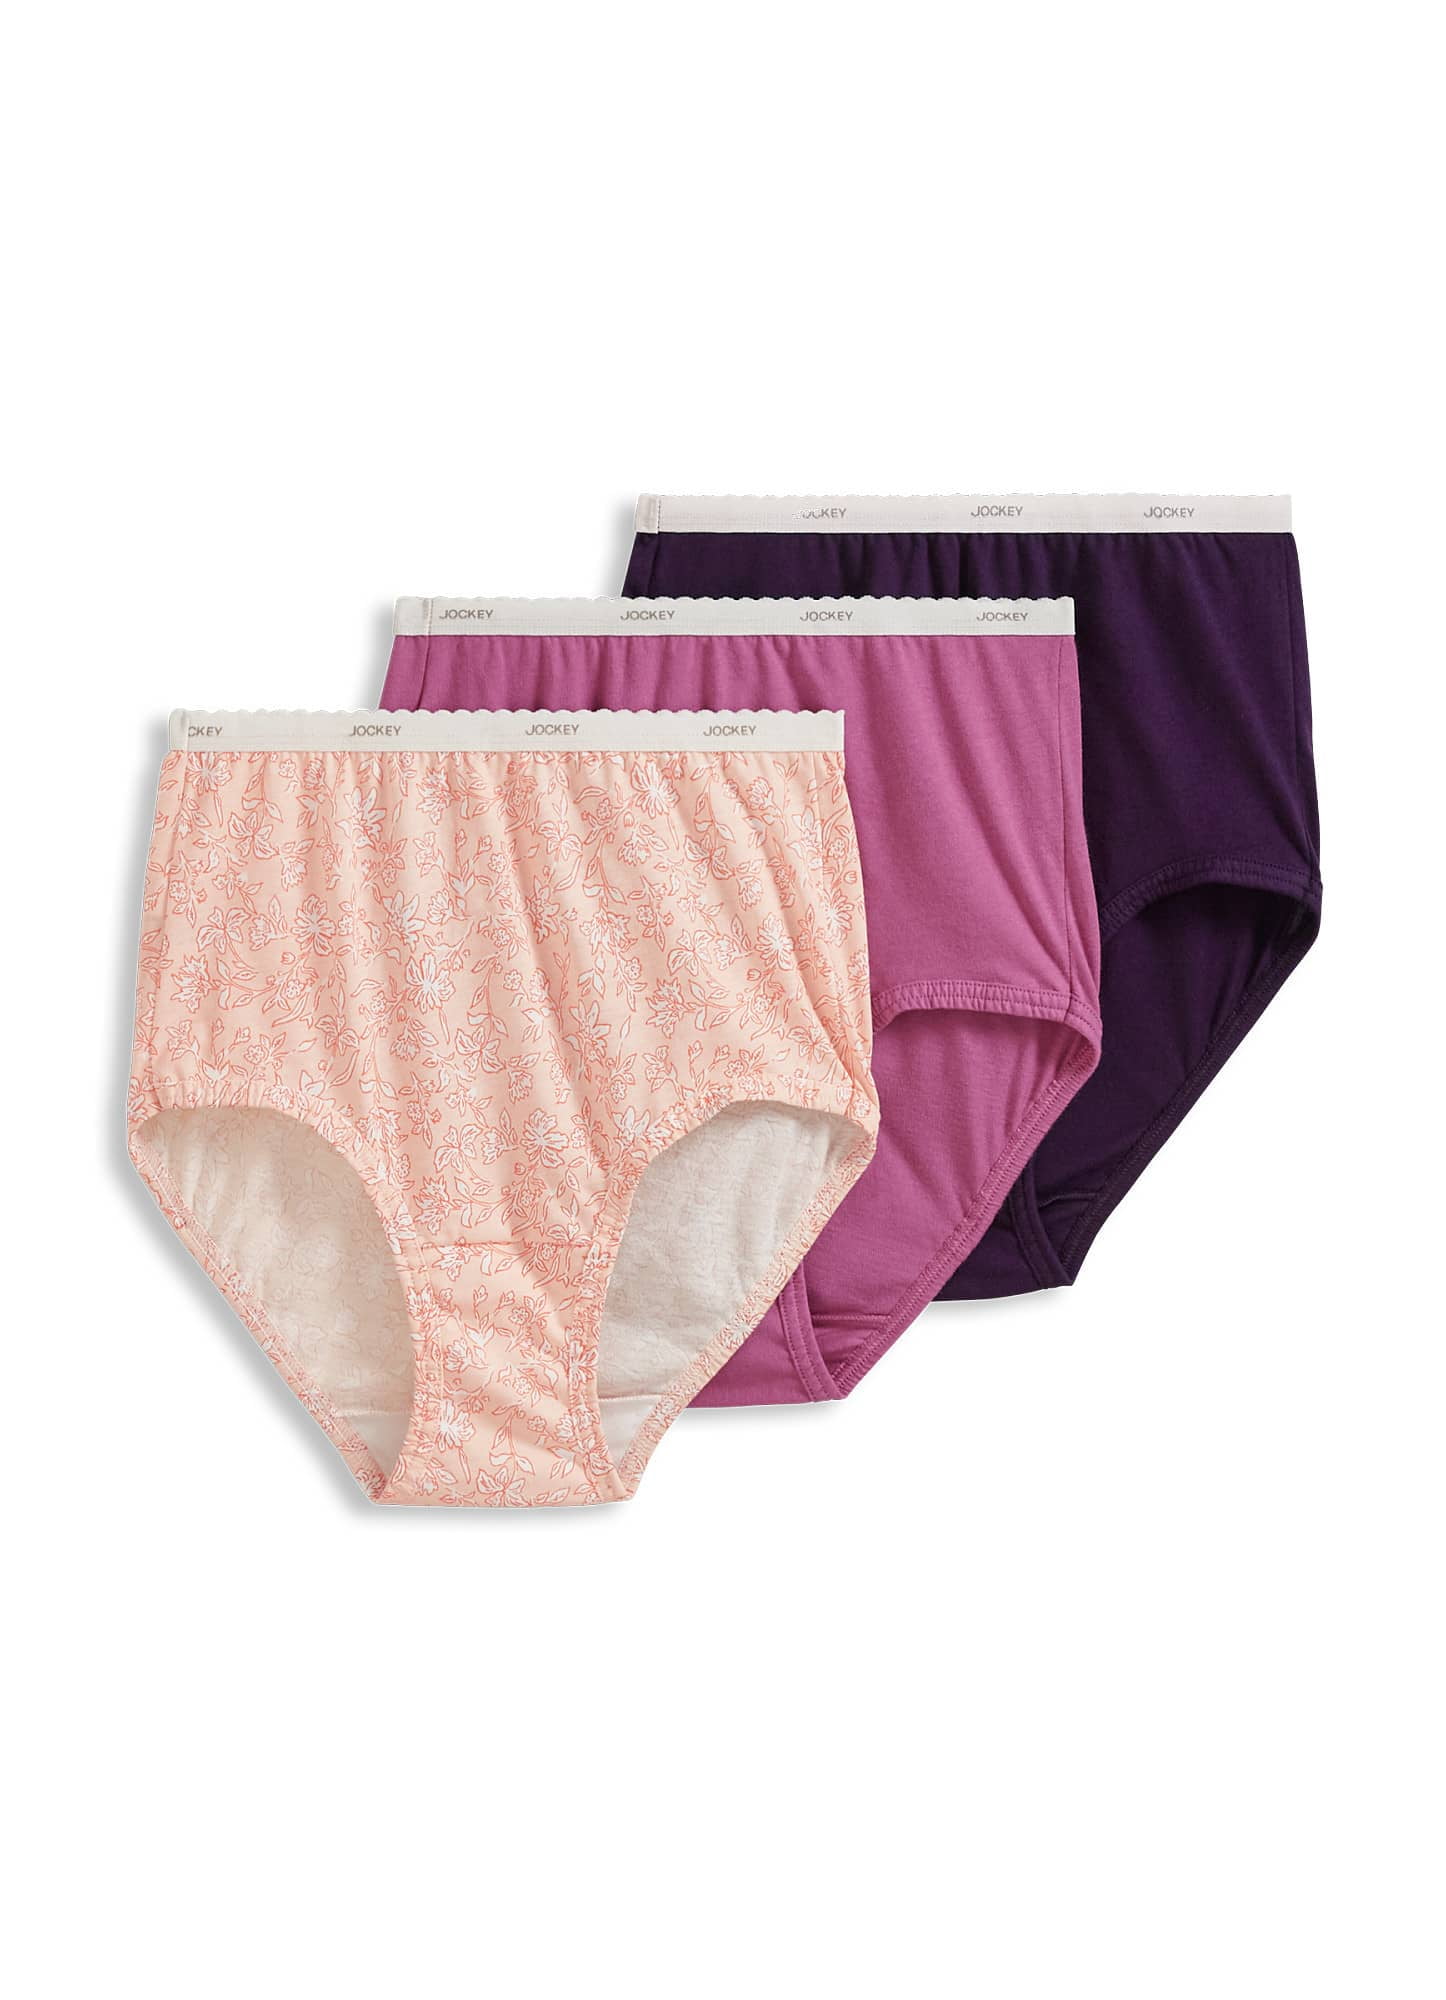 Jockey Women's Underwear Classic Brief - 6 Pack